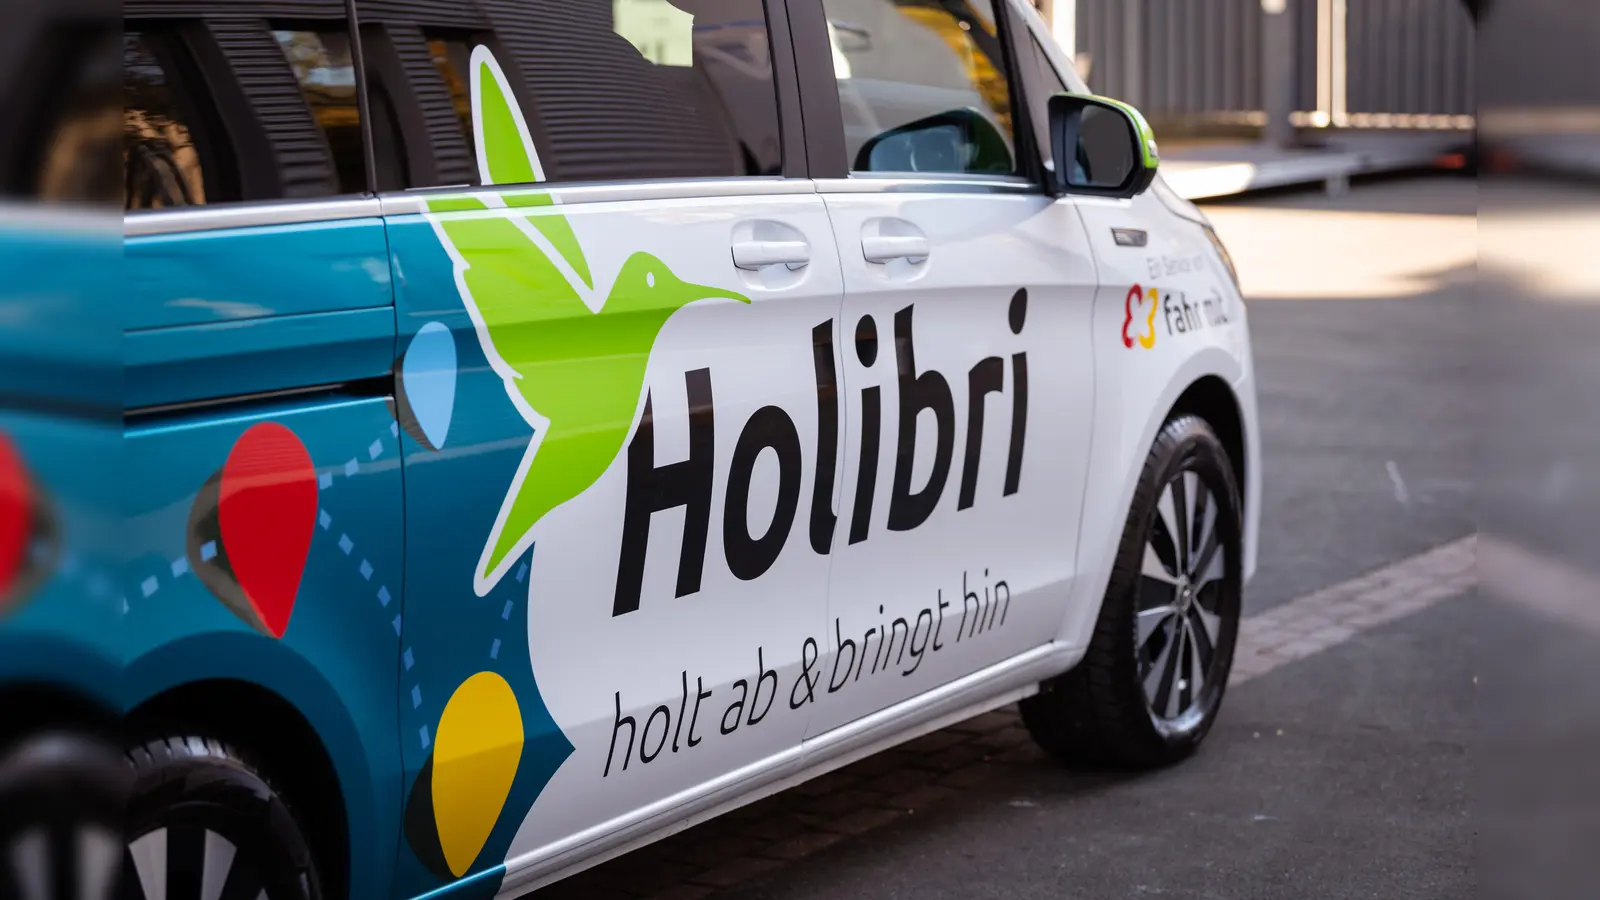 Holibri Fahrzeug in Höxter. (Foto: nph)